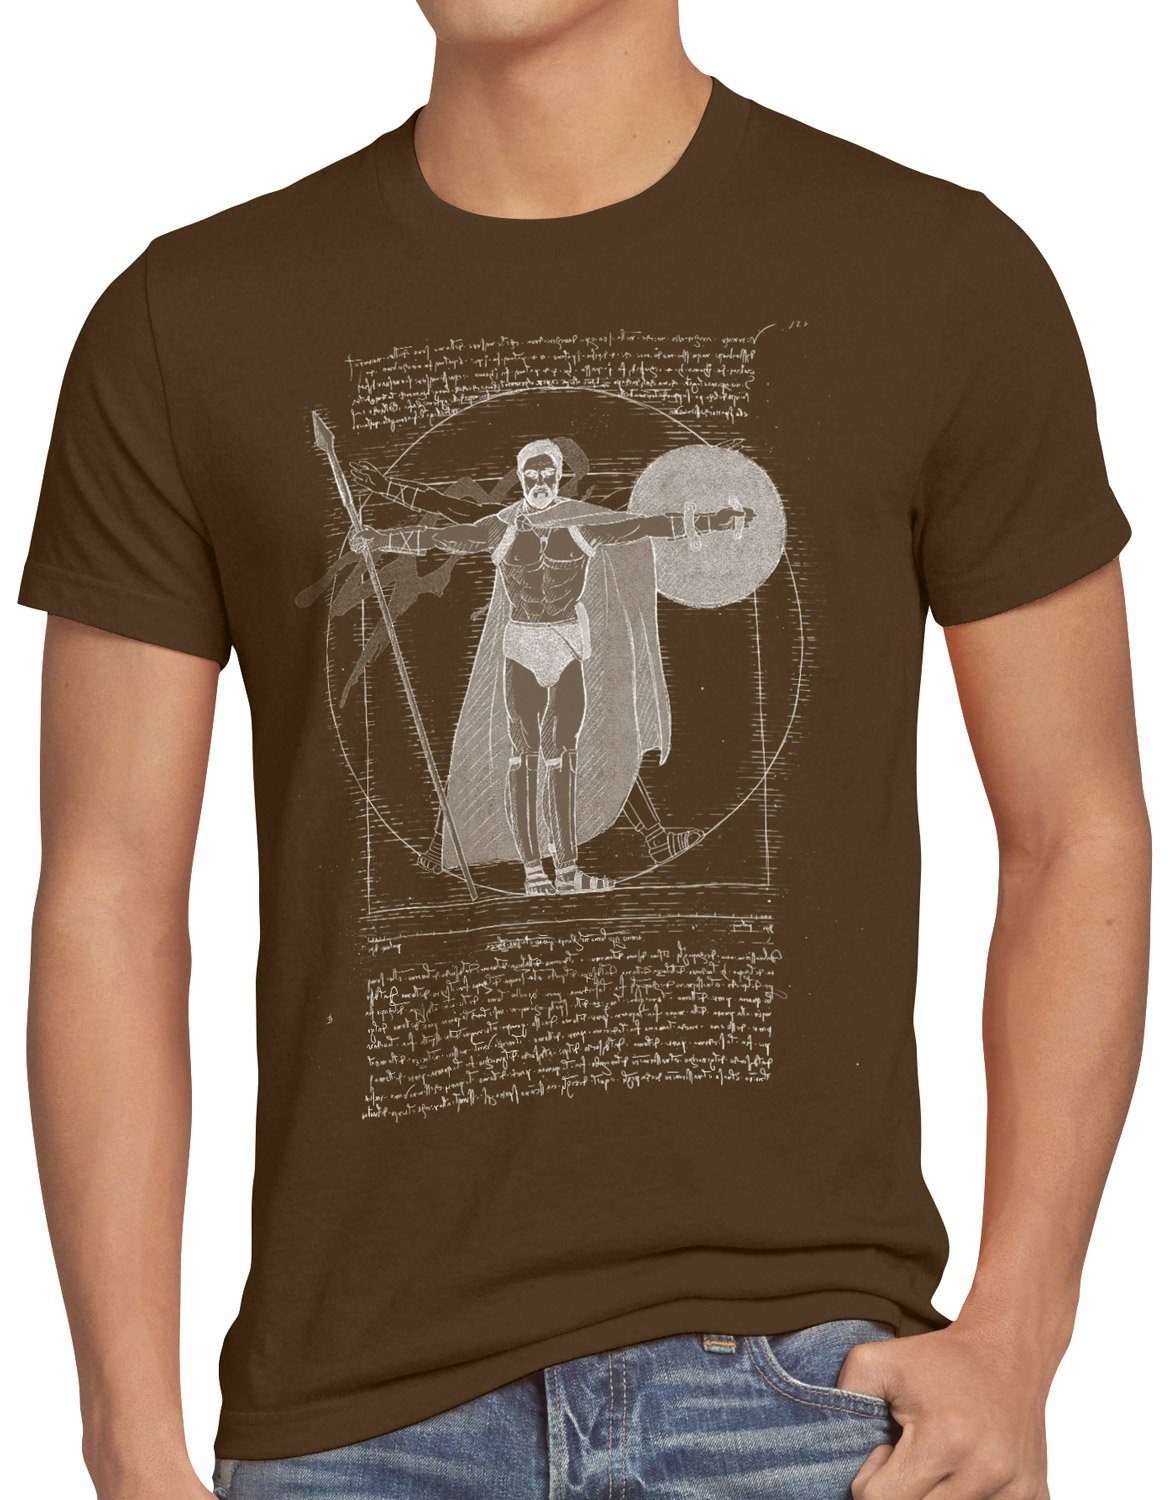 style3 Print-Shirt Herren T-Shirt Vitruvianischer dreihundert kämpfer 300 antiker braun Spartaner